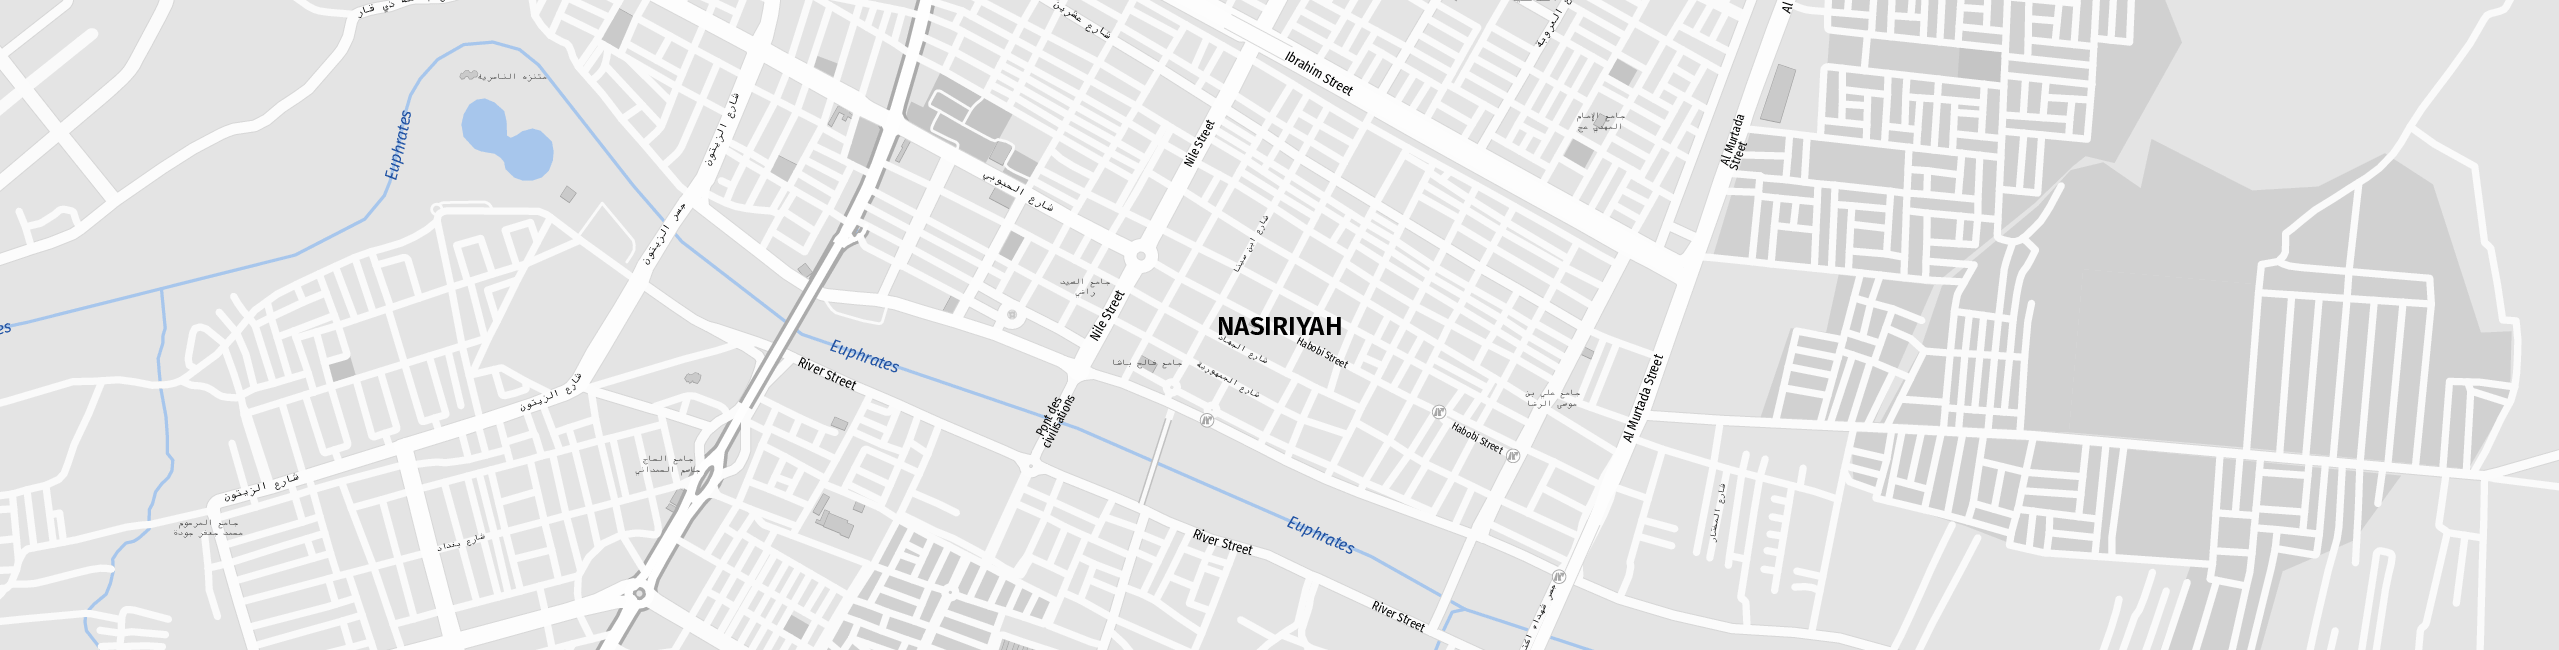 Stadtplan Nasiriyah zum Downloaden.